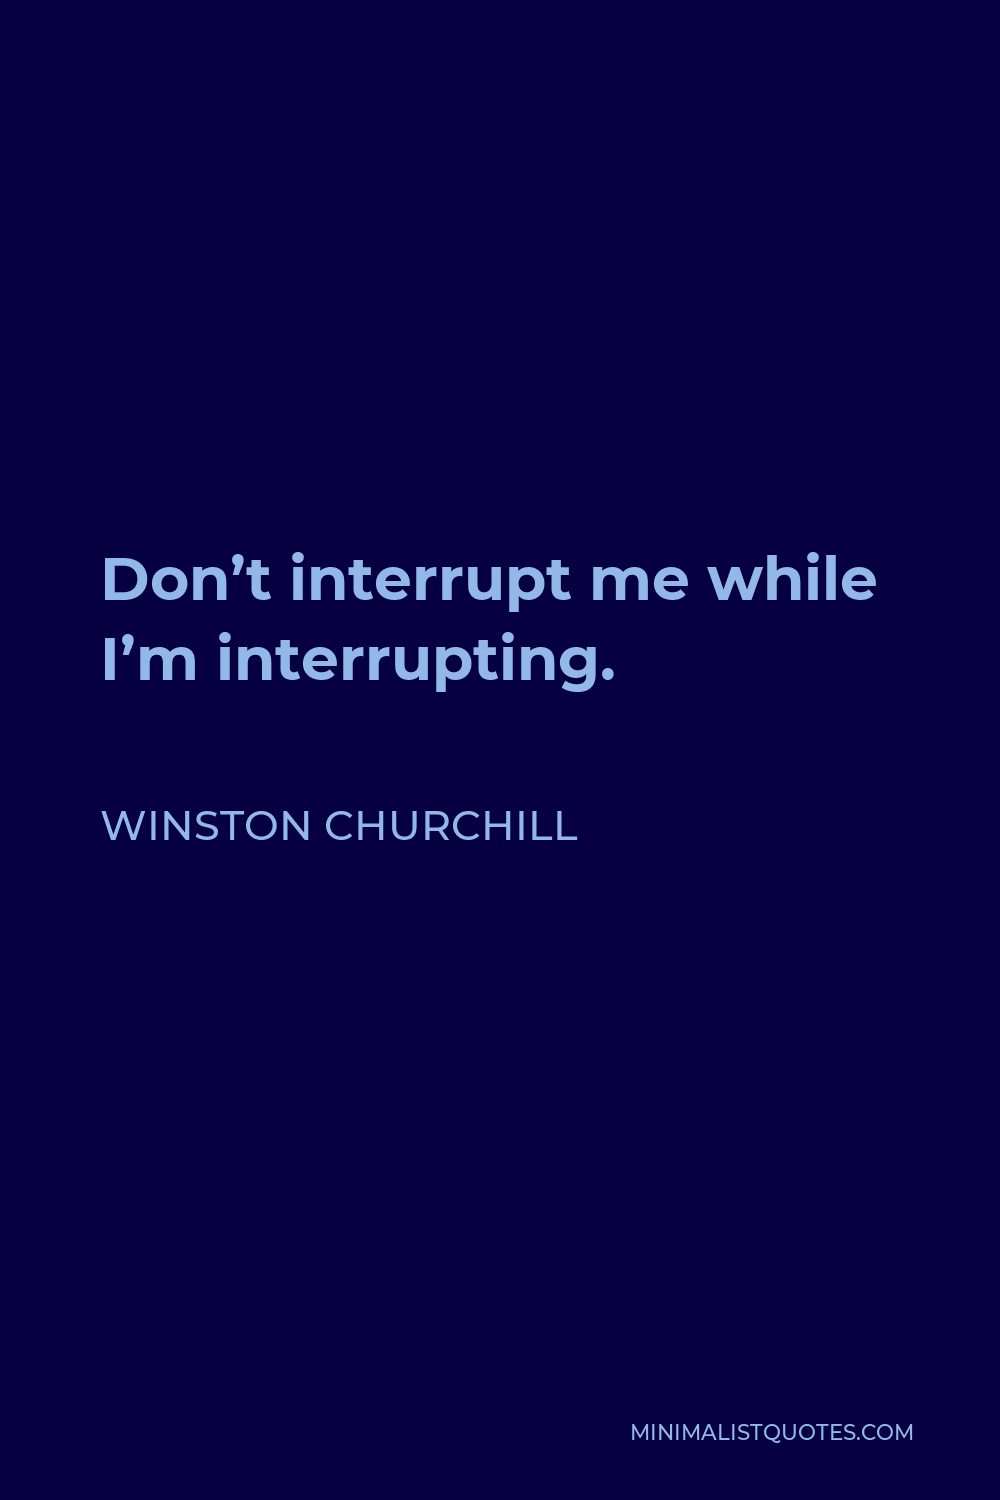 Winston Churchill Quote - Don’t interrupt me while I’m interrupting.